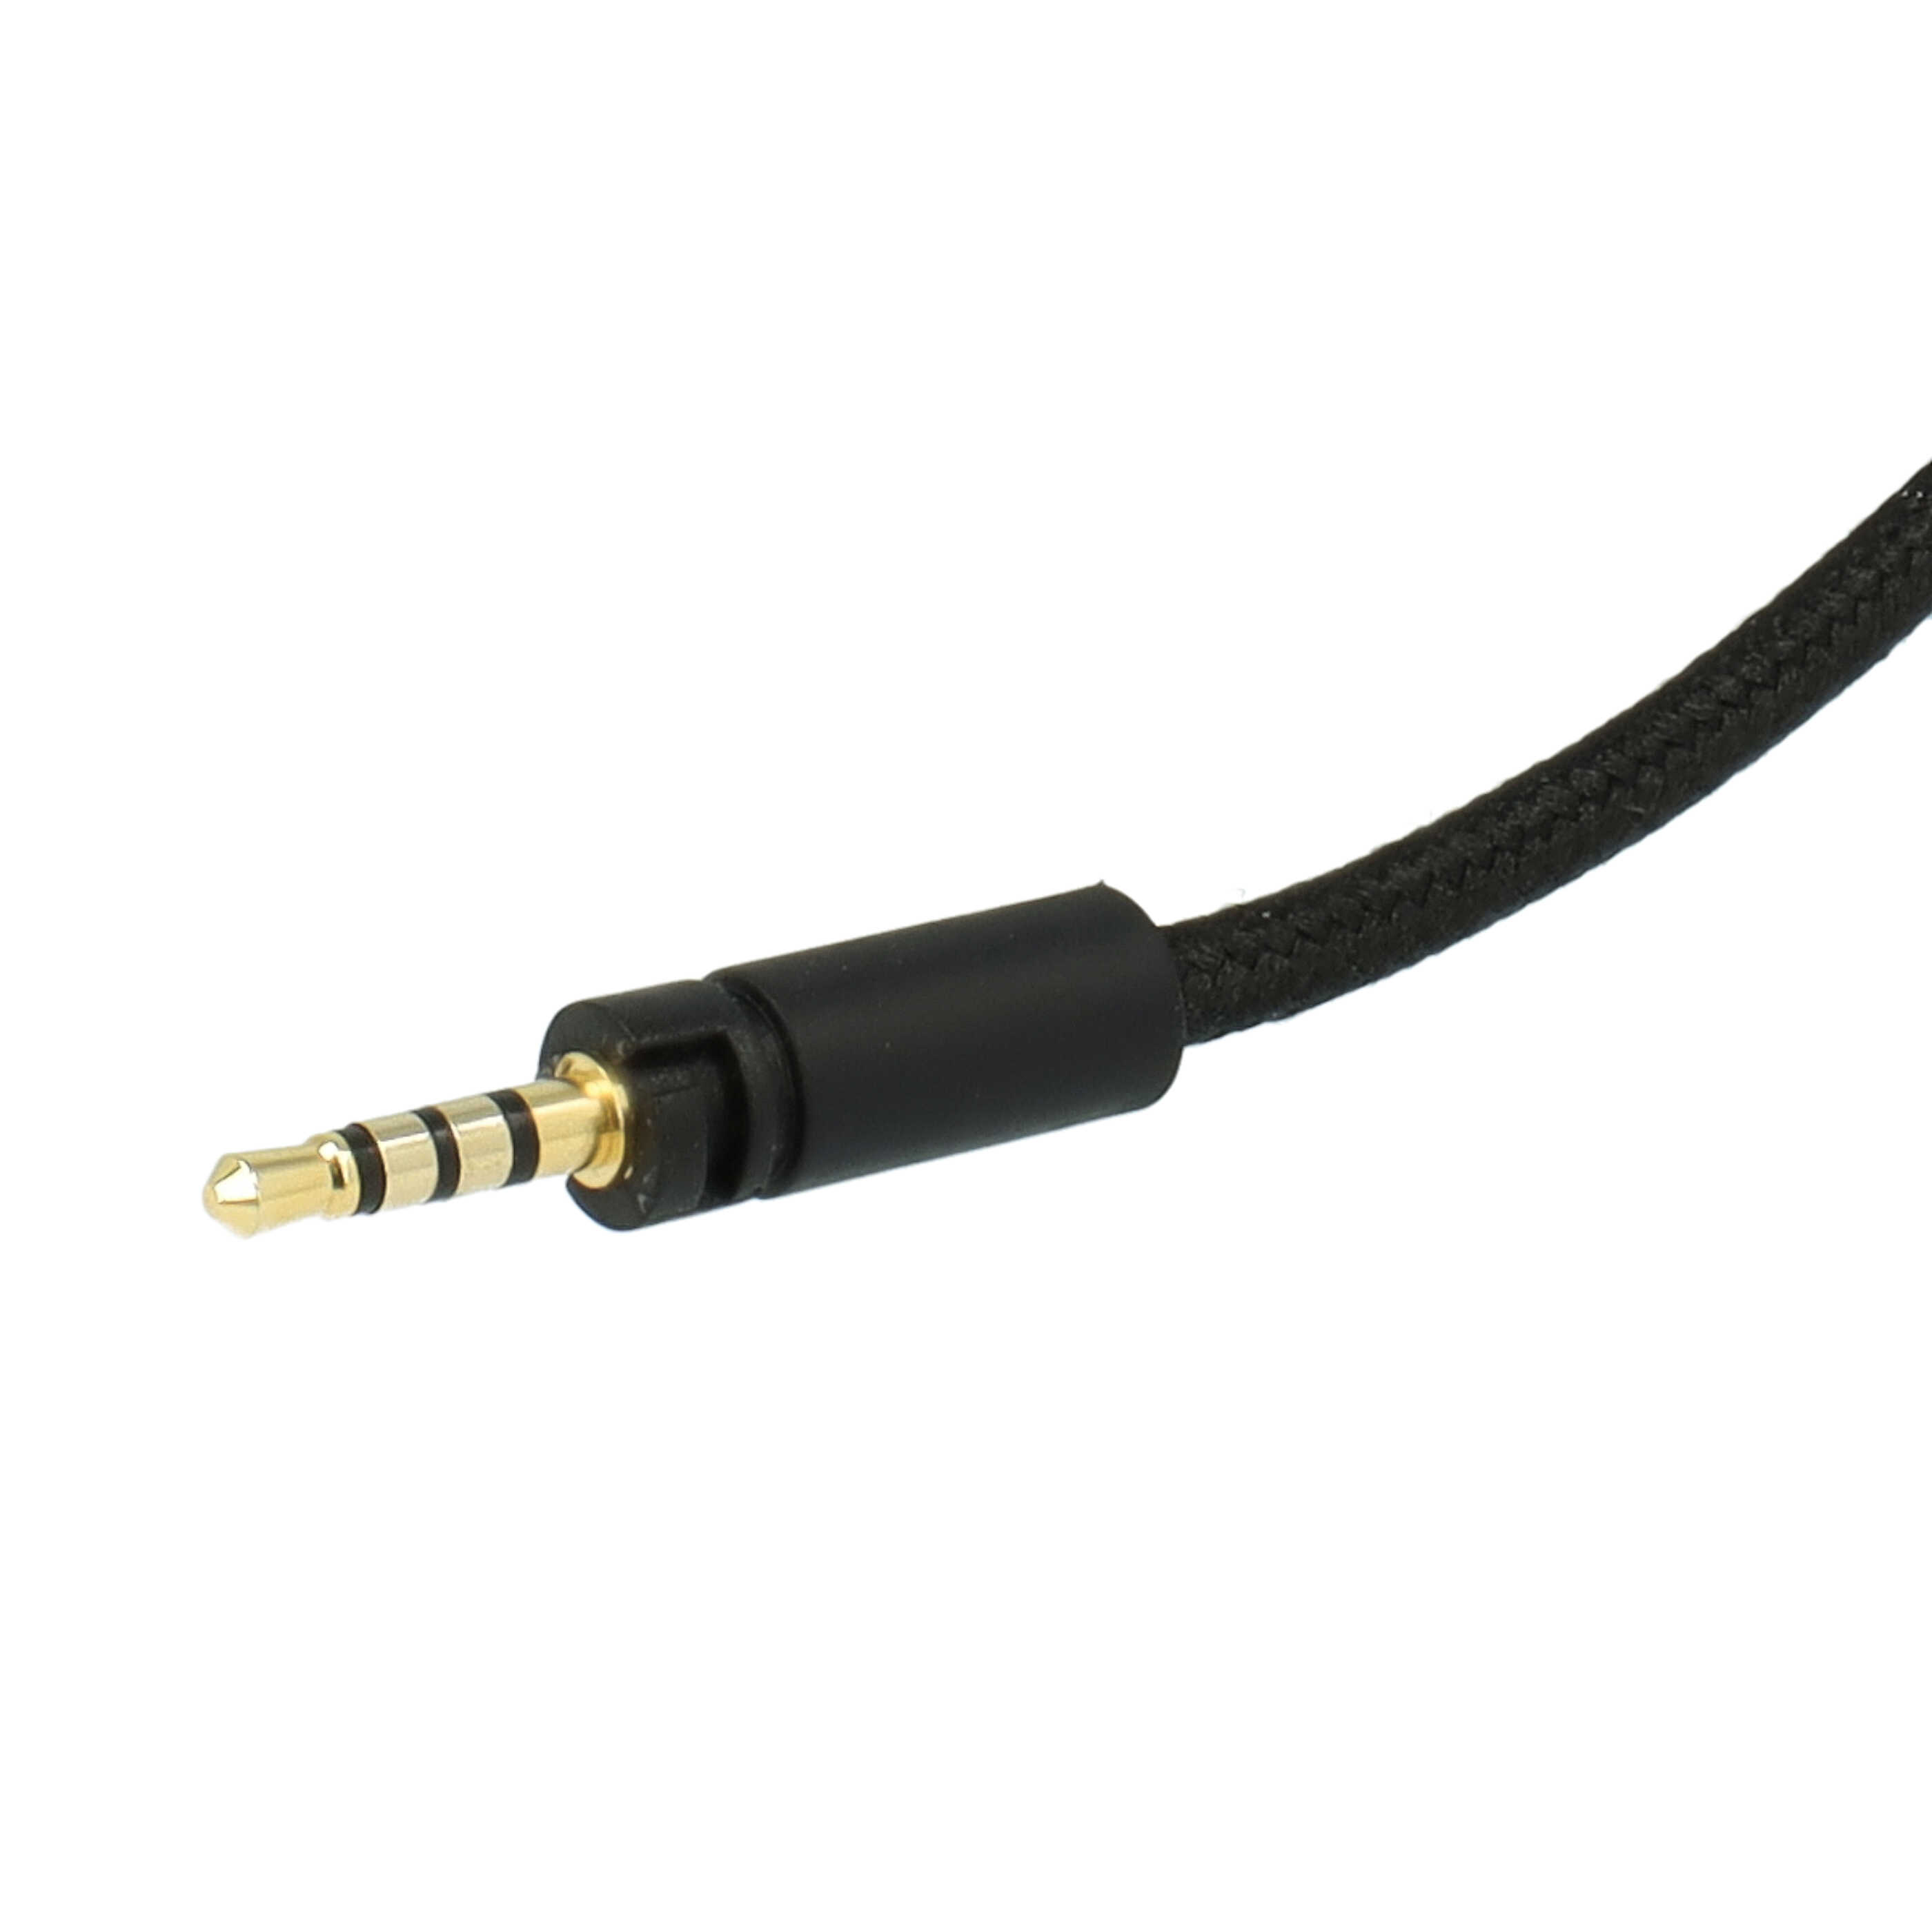 Kabel do słuchawek Sennheiser zamiennik Sennheiser 564549 - czarny, 120 cm